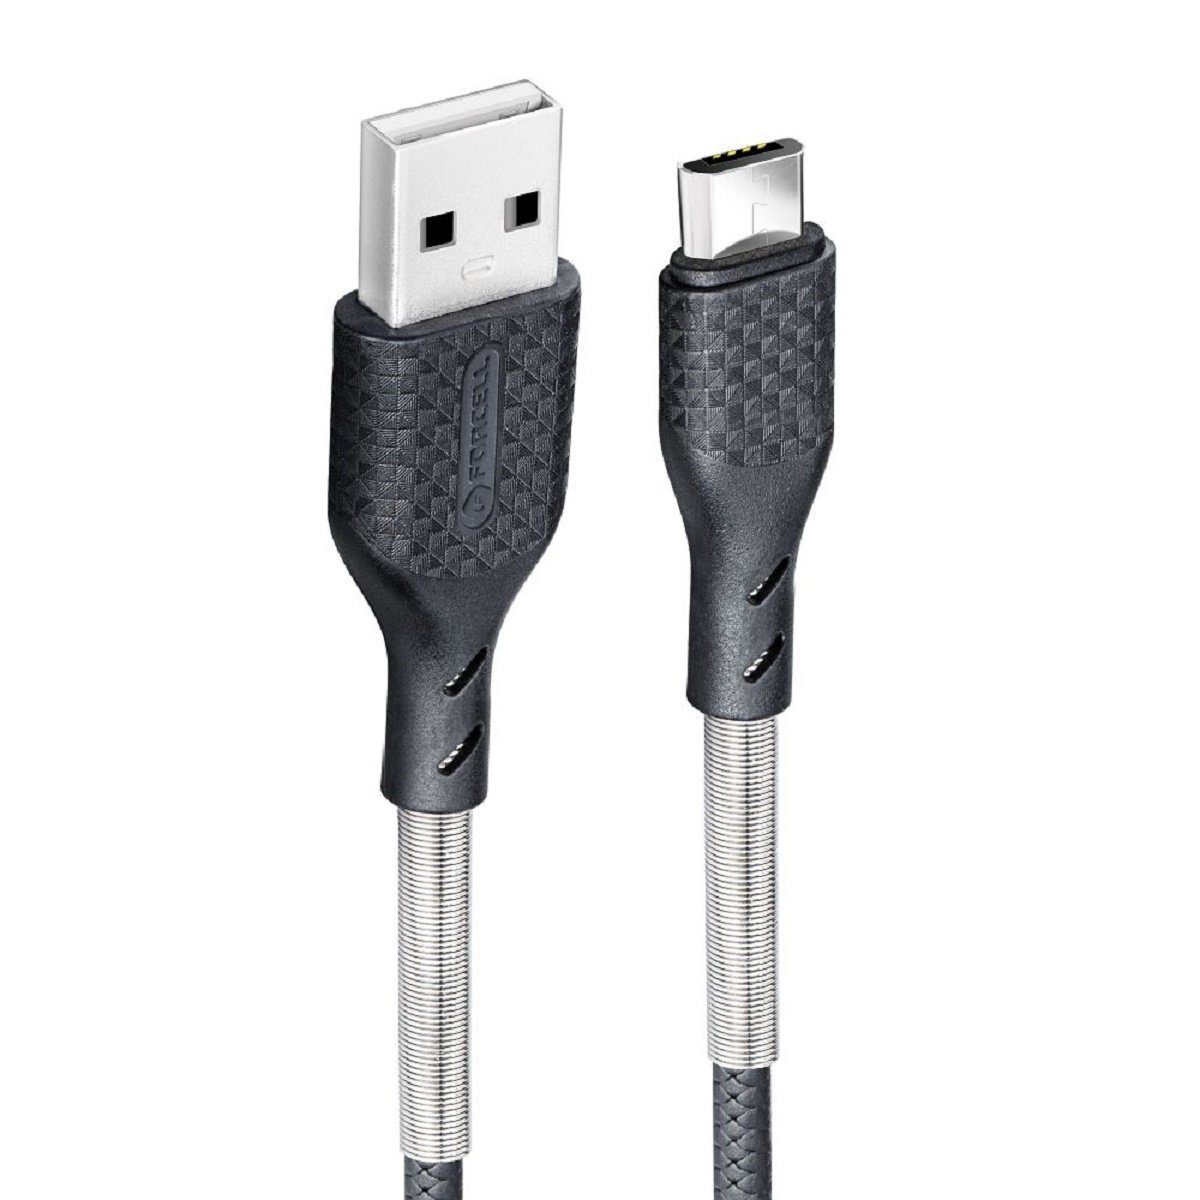 Forcell Ladekabel USB zu Micro 2,4A CB-03A Schwarz 1 Meter Smartphone-Kabel